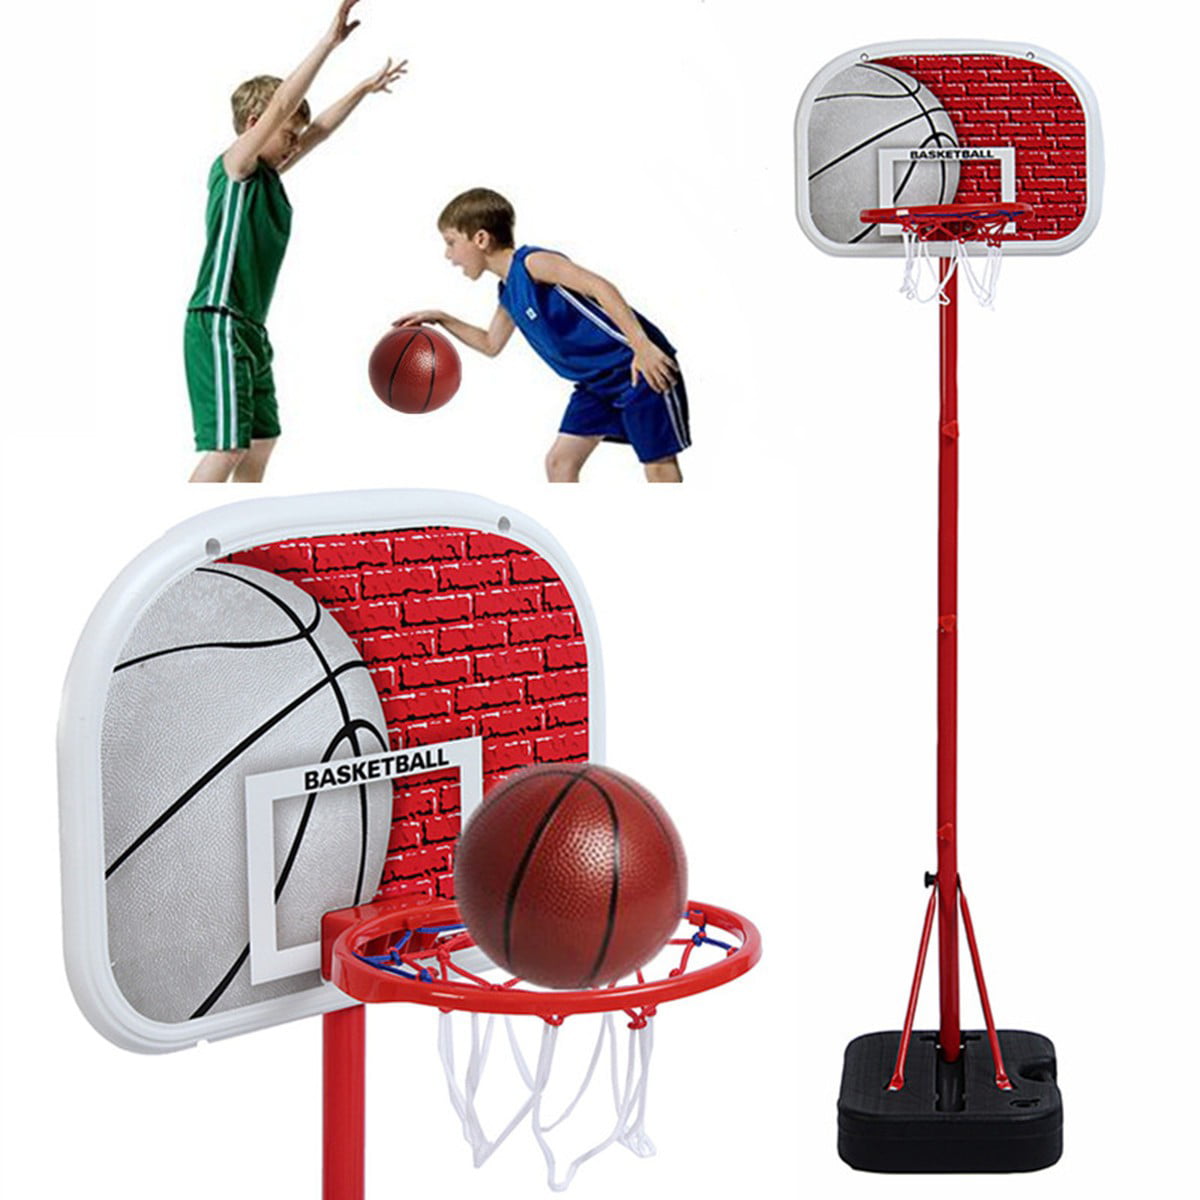 NEW Basketball Hoop Stand System Ring Backboard Net Height Adjustable Kids Gift 